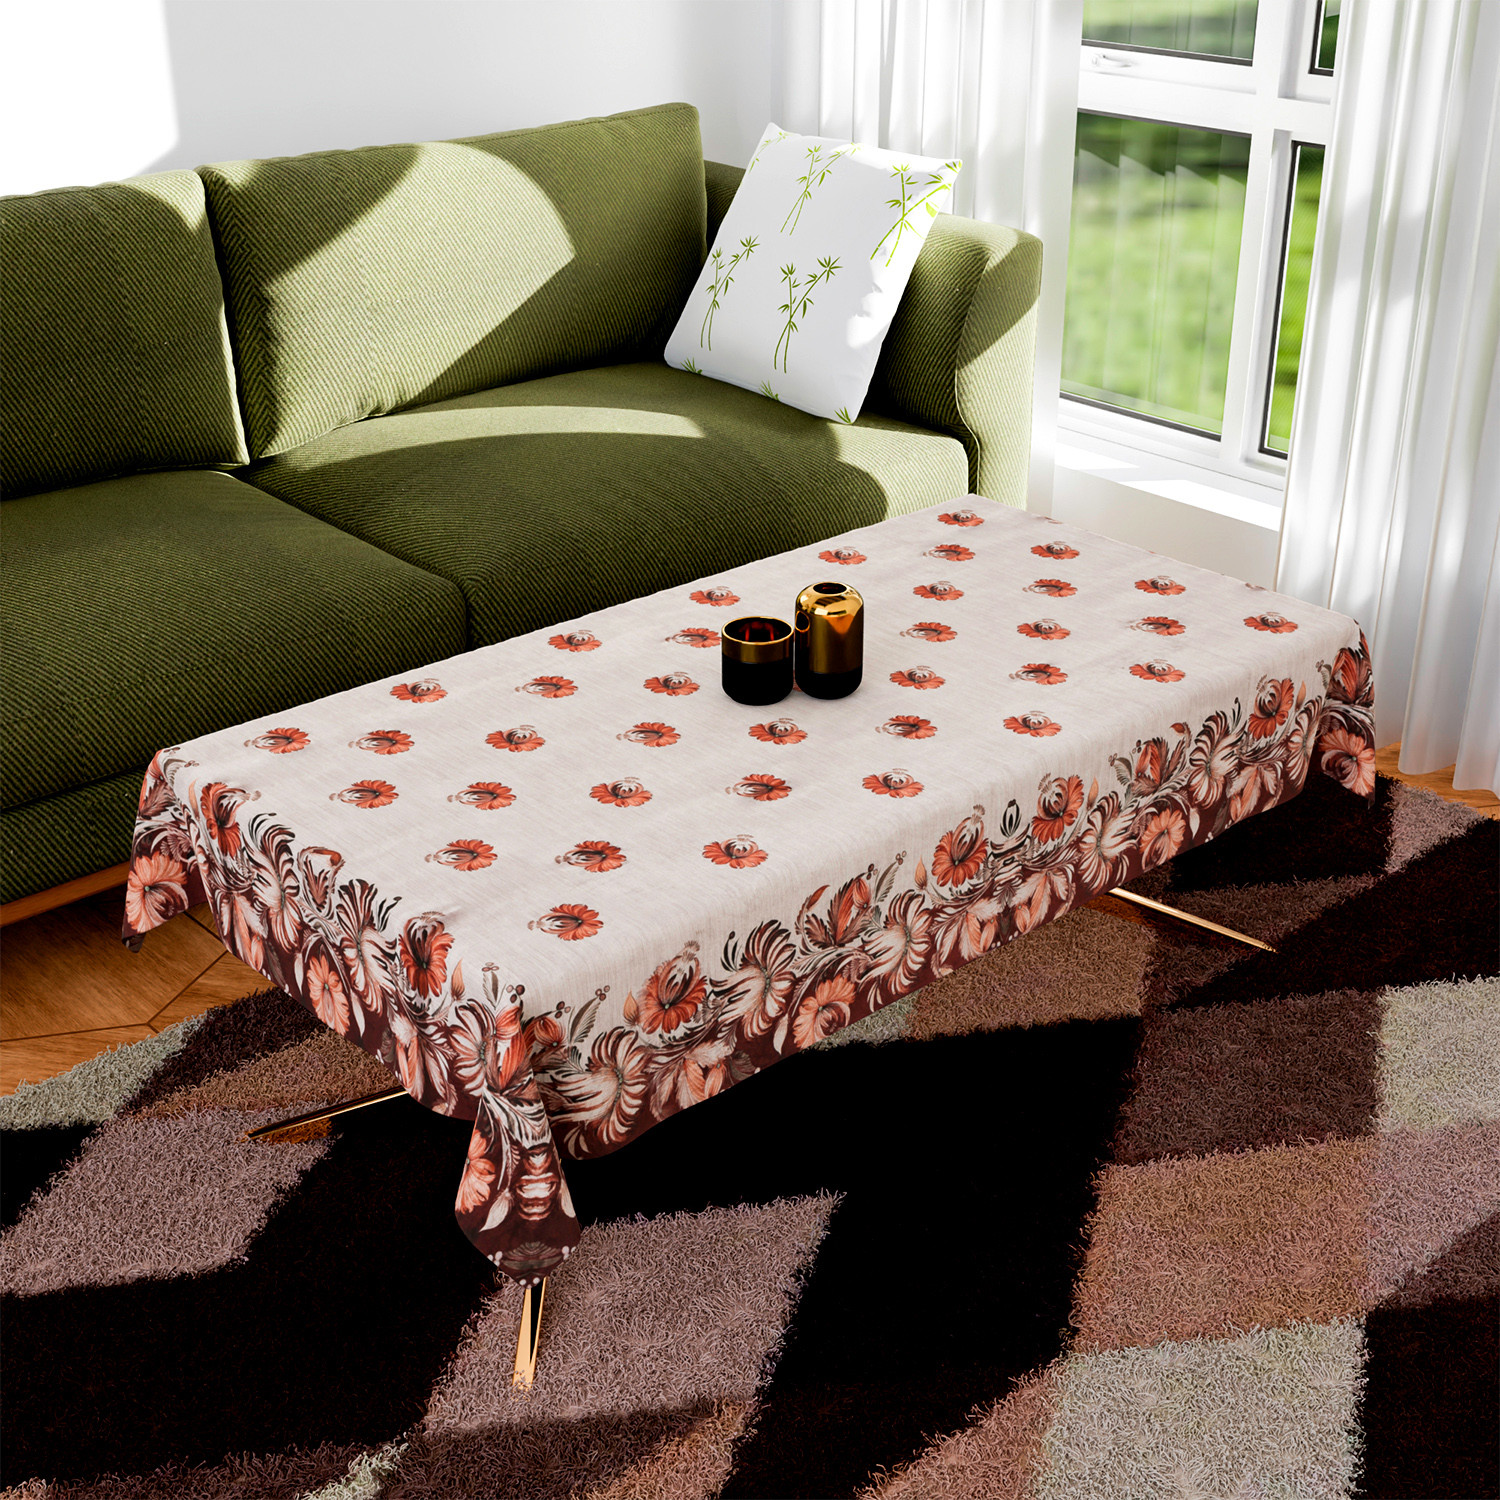 Kuber Industries Sofa Cover | Sofa & Center Table Cover Set | Brown Flower Sofa Cover with Table Cover | Velvet 5 Seater Sofa & Table Cover Set For Living Room | Cream